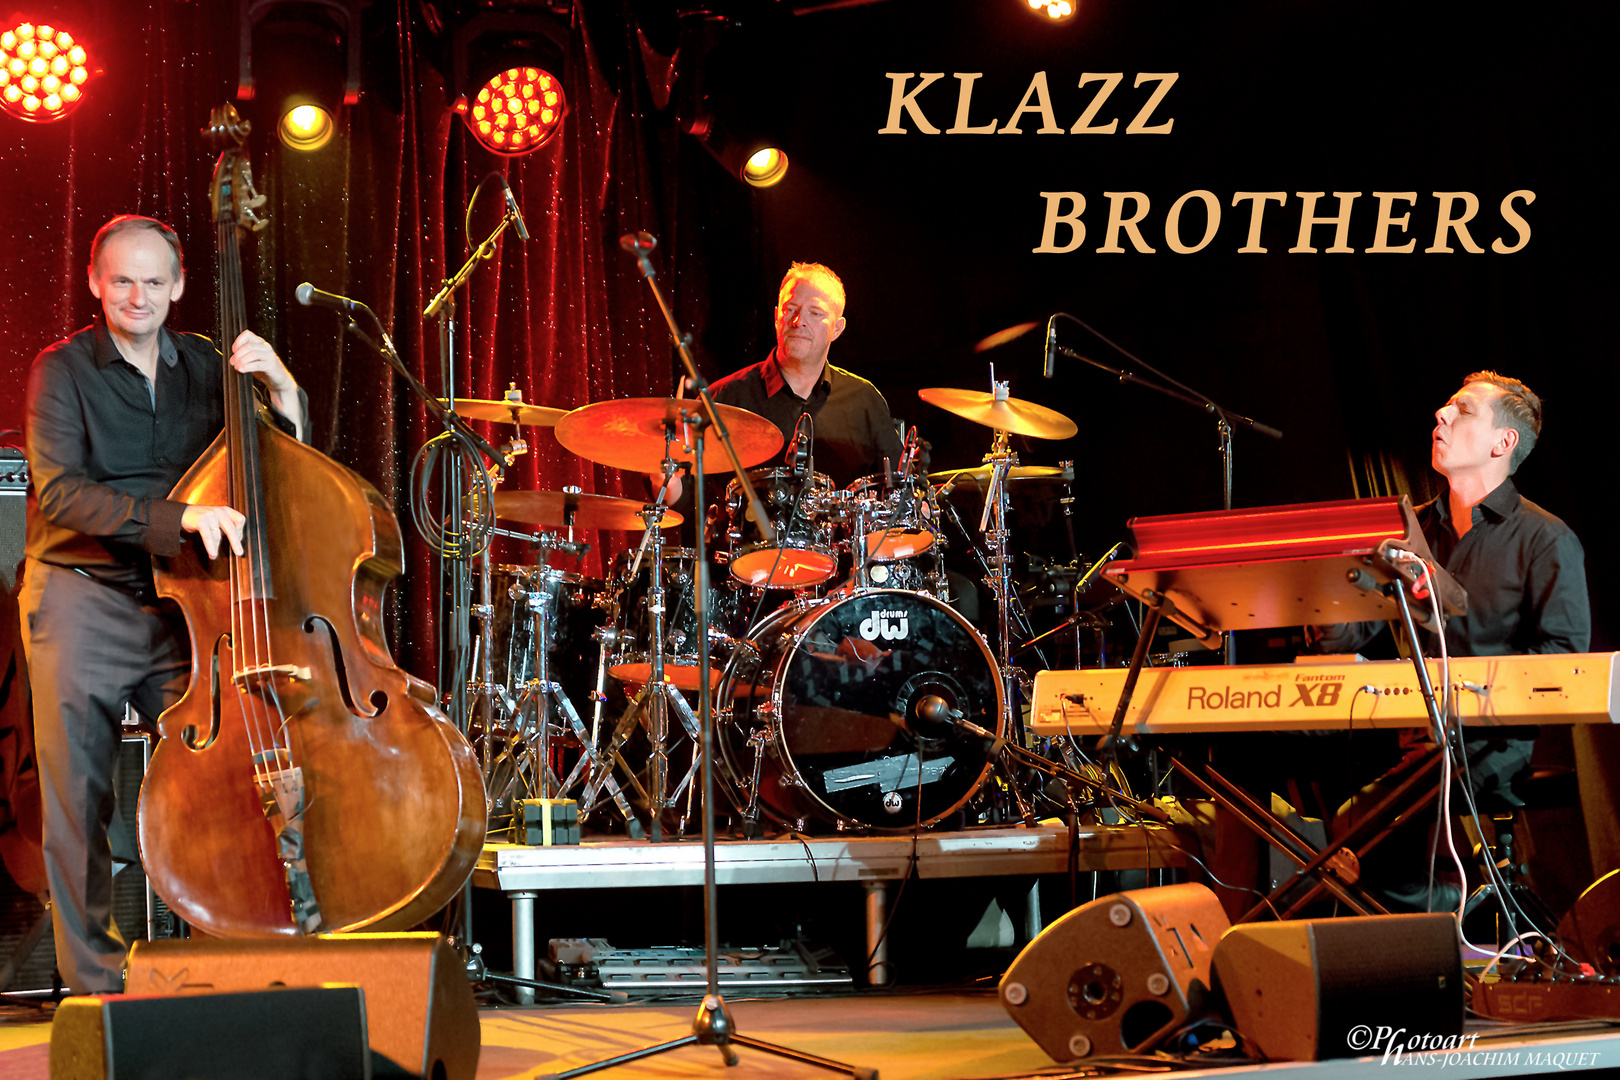 Klazz Brothers